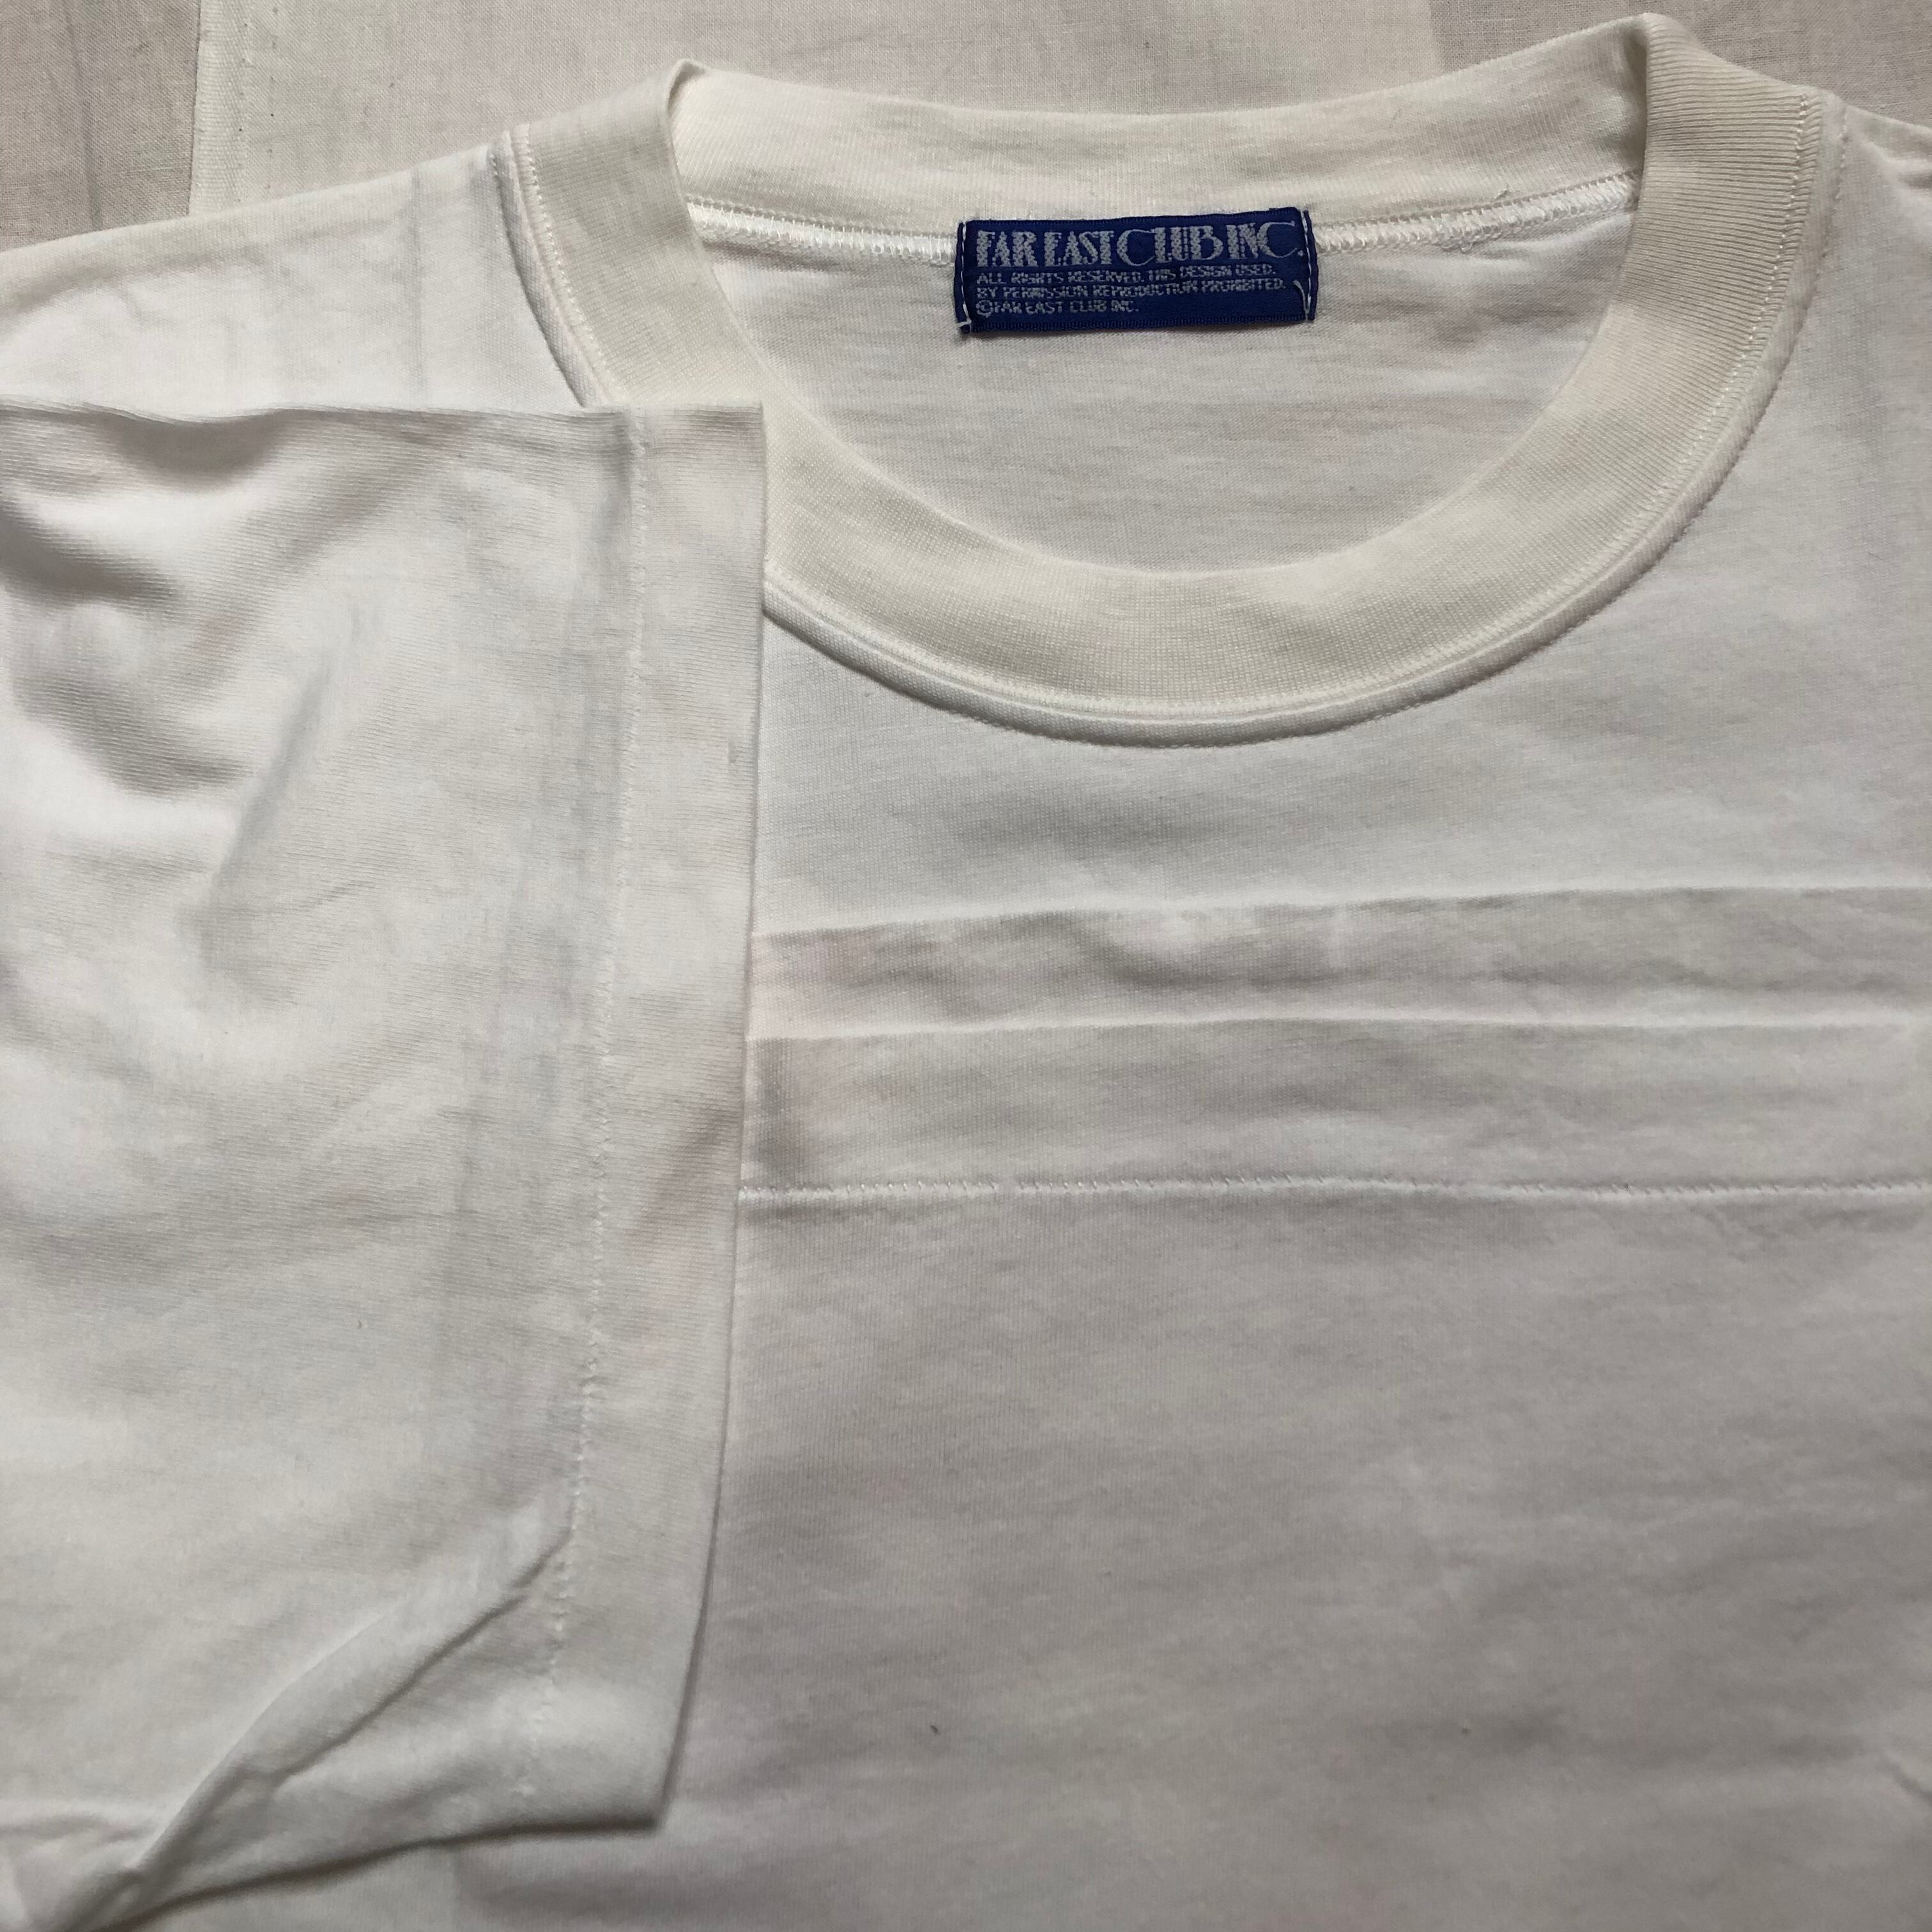 1990’s “小田和正” Printed T-Shirt